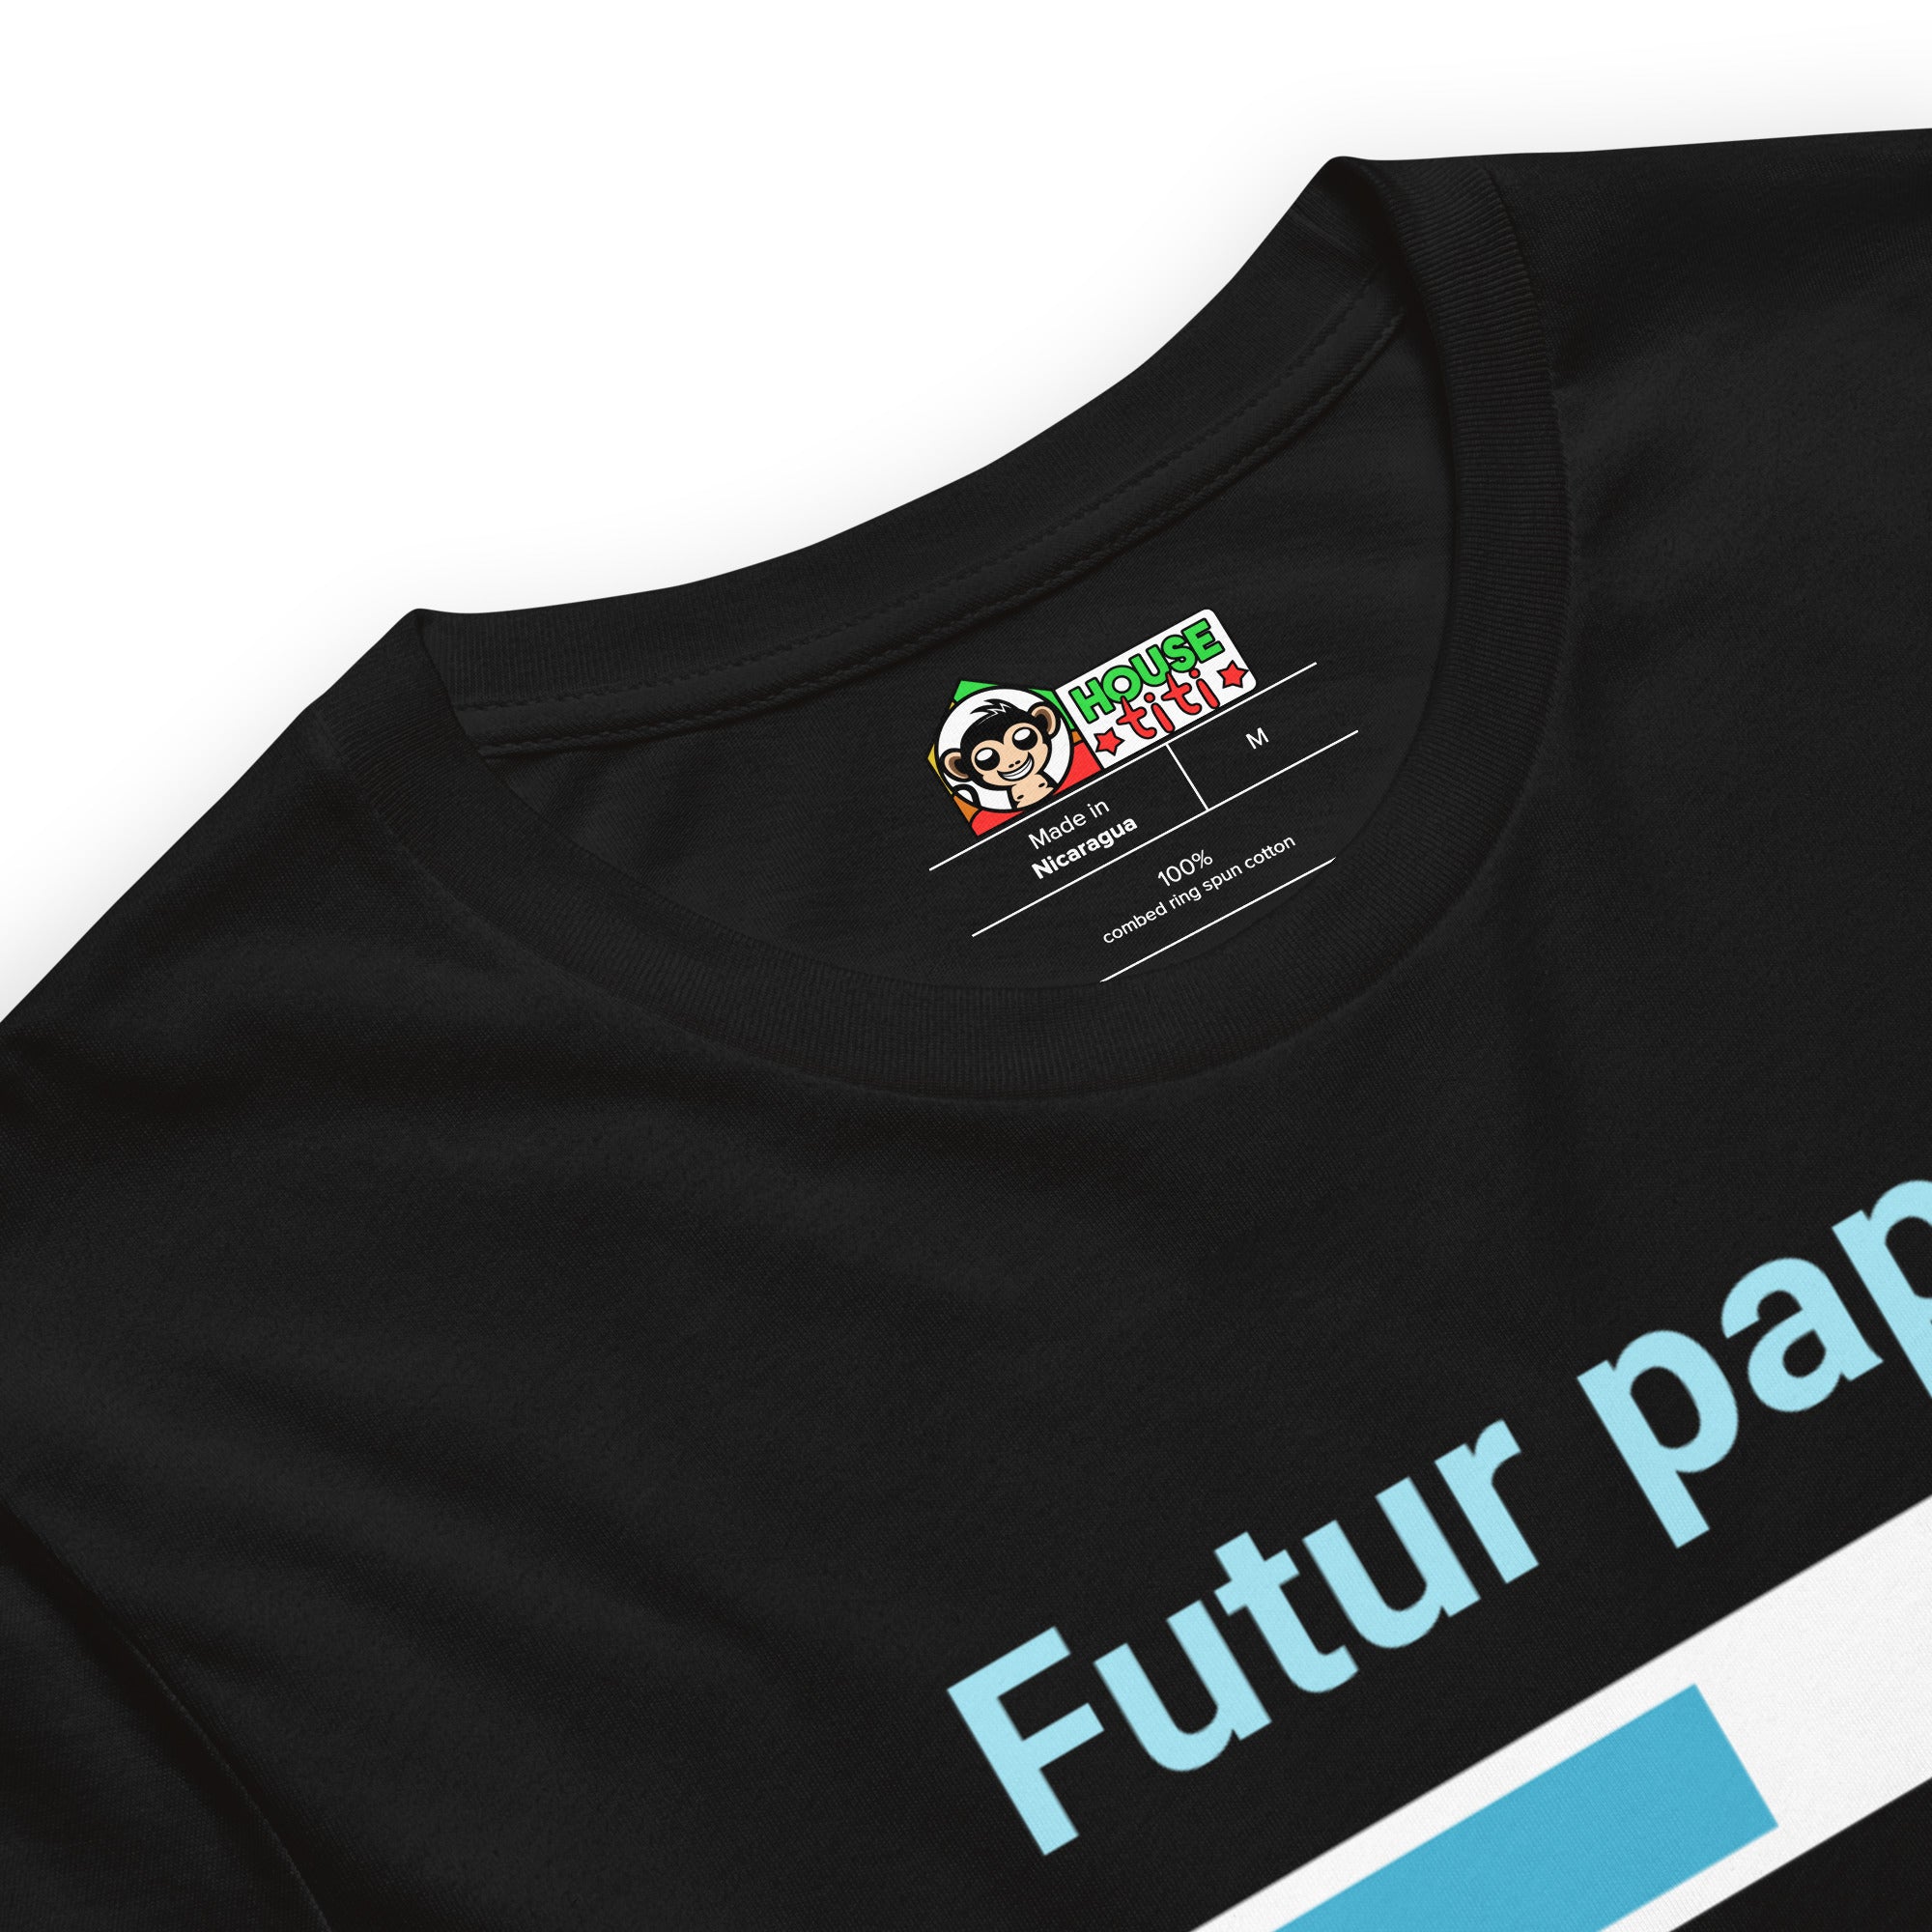 T-shirt unisexe Futur Papa loading (Lettrage clair)